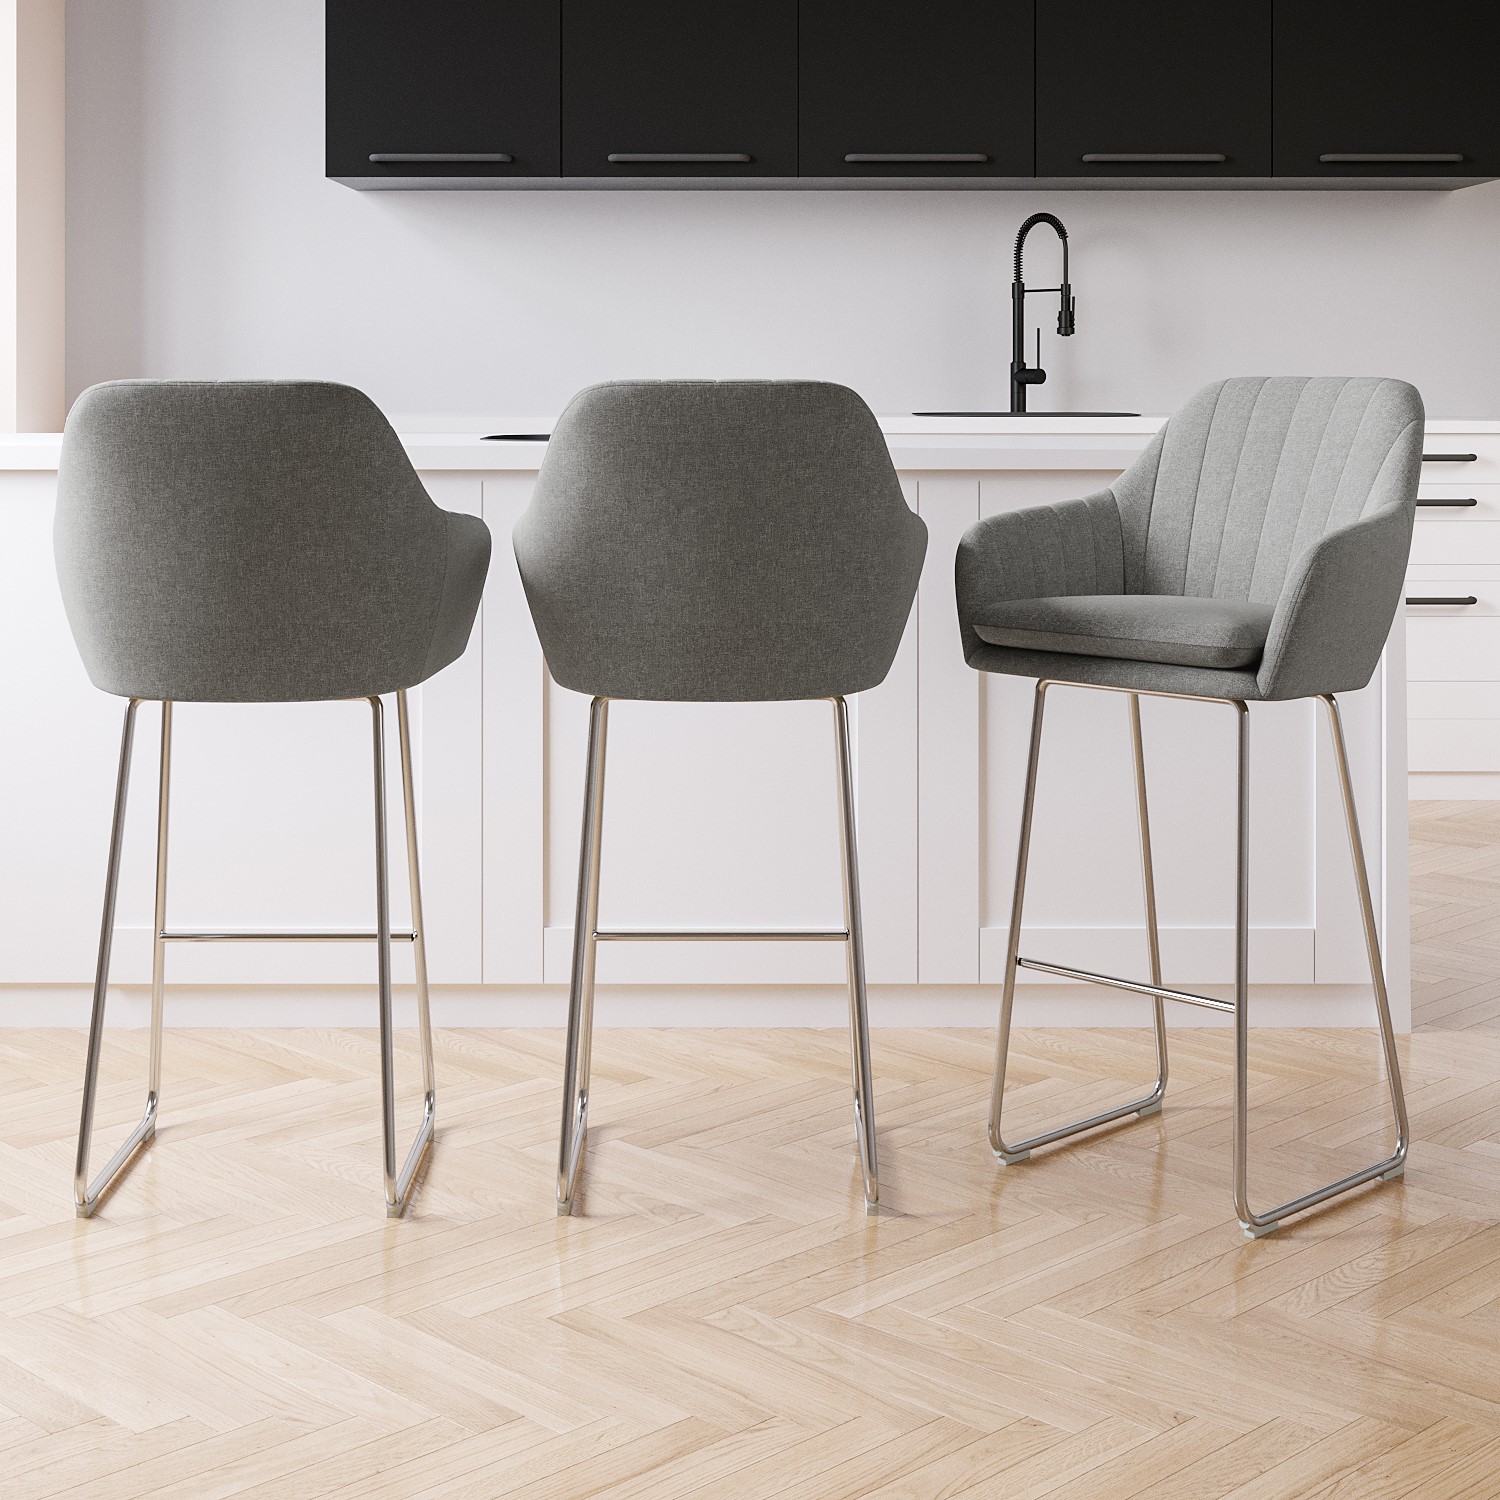 Photo of Set of 3 grey fabric bar stool with back - 77cm - logan